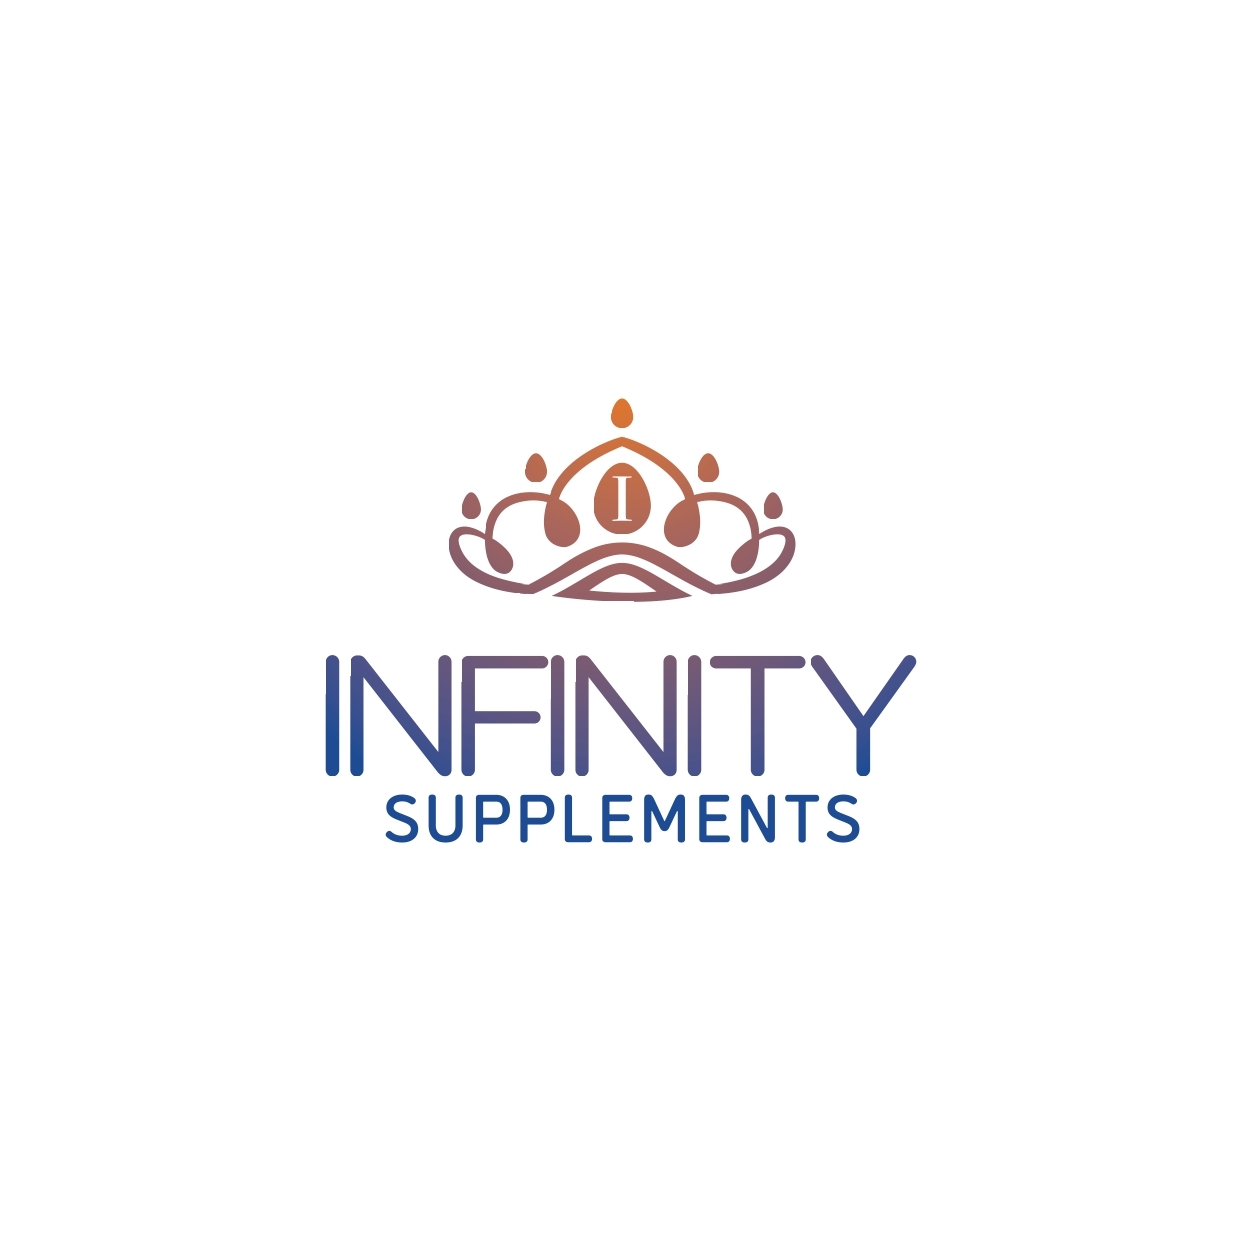 Infinity supplements